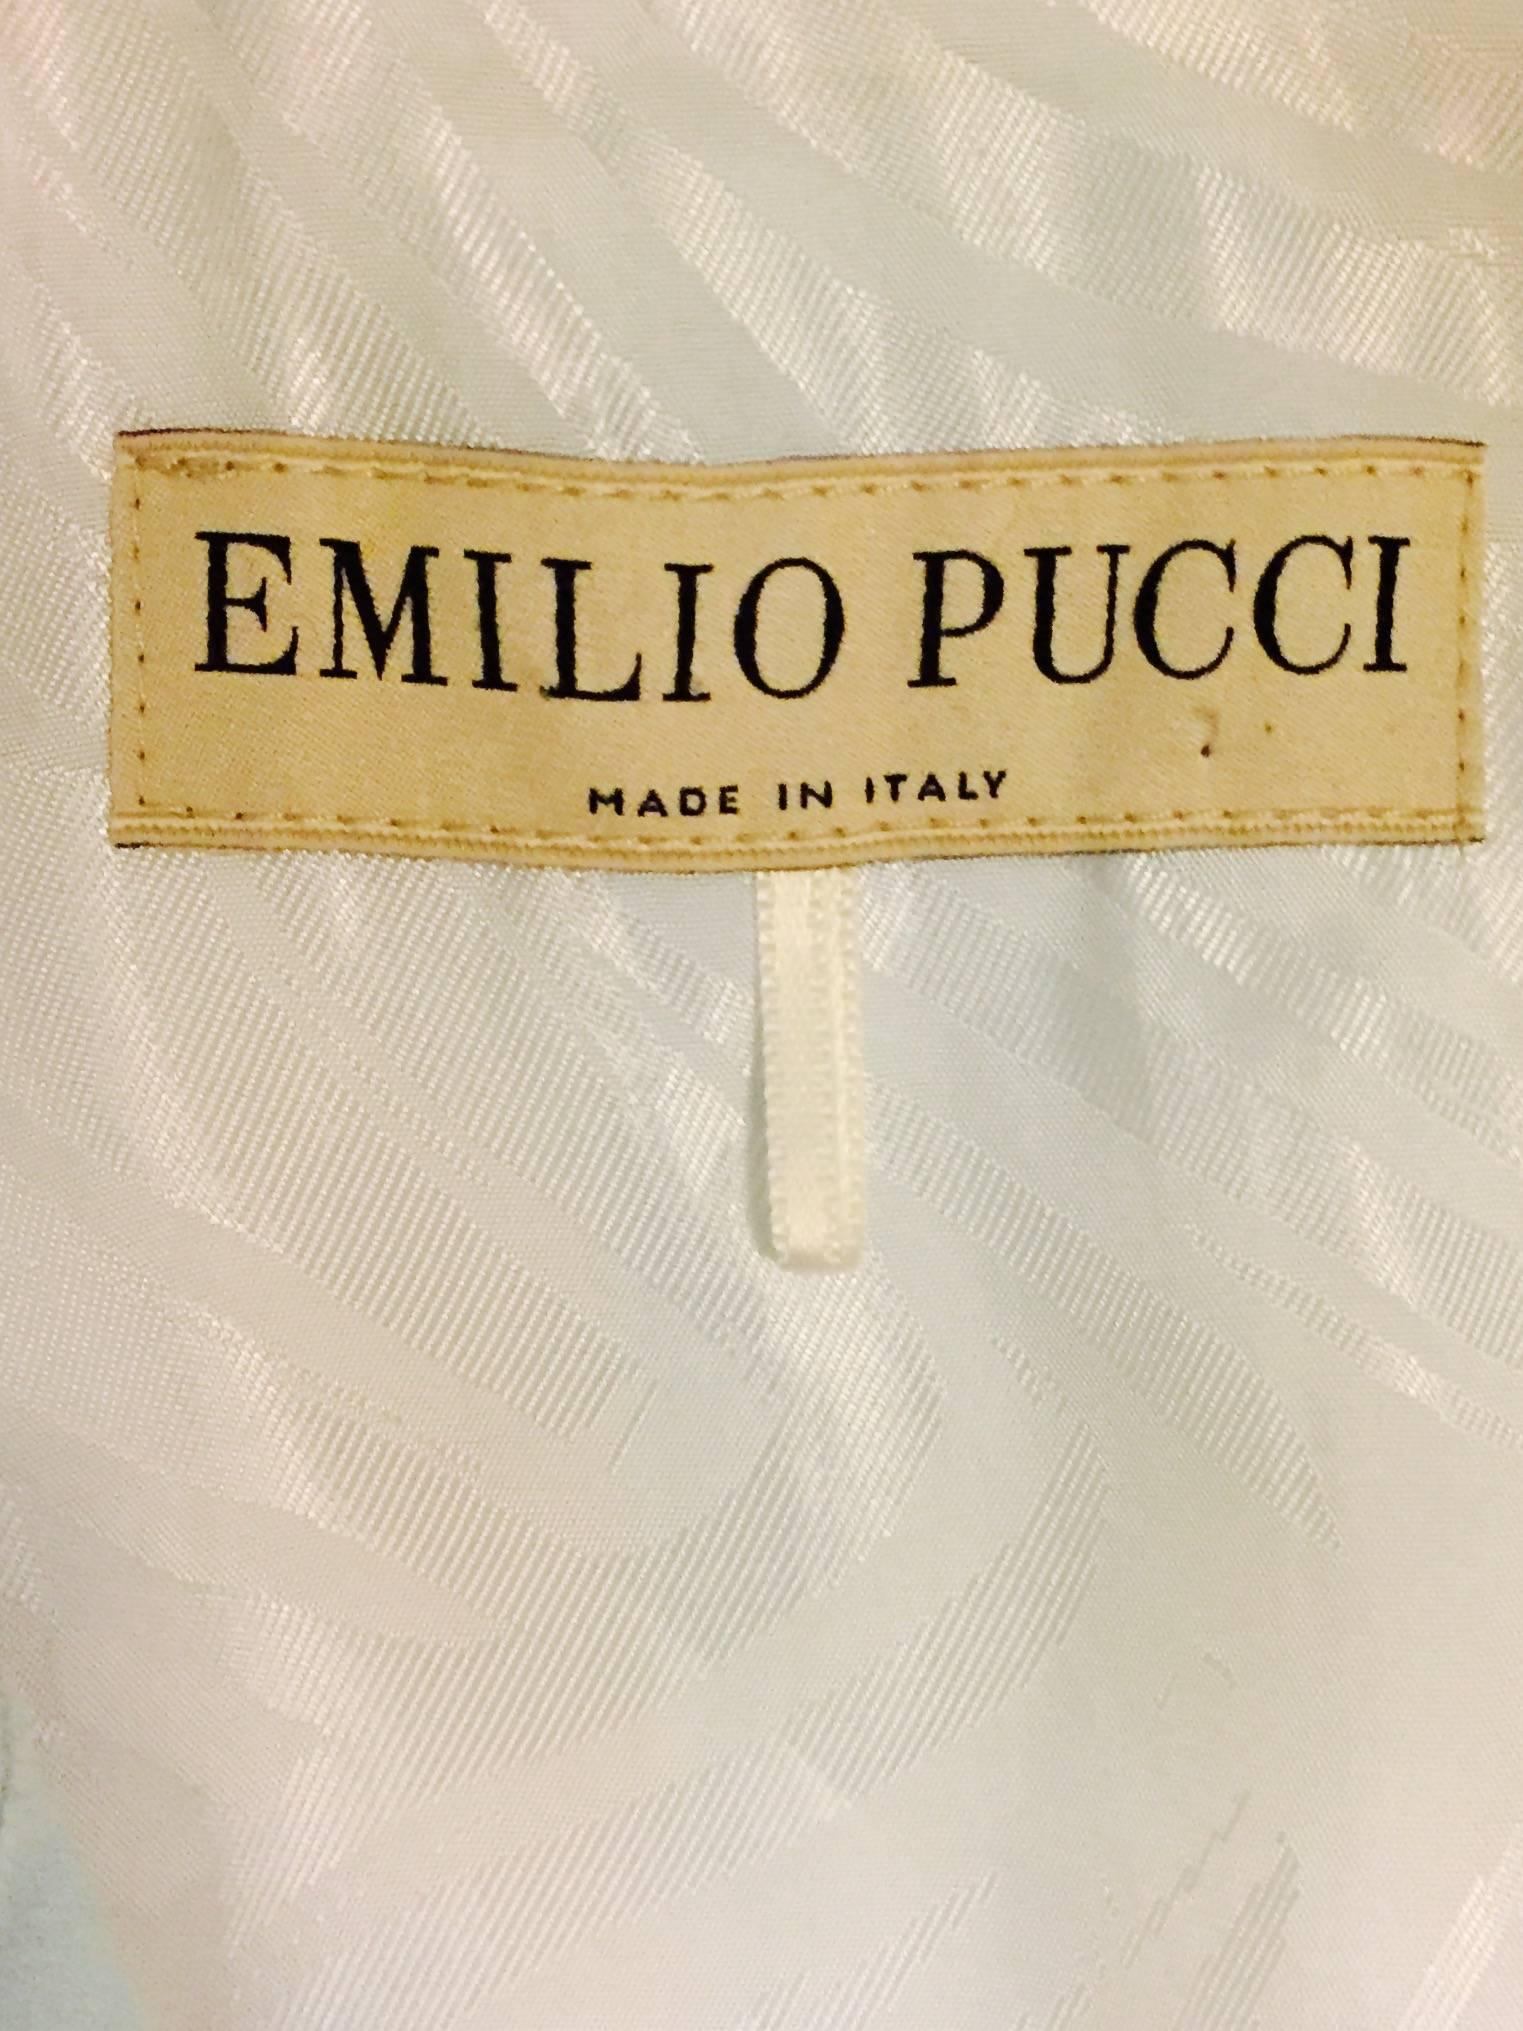 Emilio Pucci 2 Piece Pant Suit In Light Blue Background With Black Lace Print 1